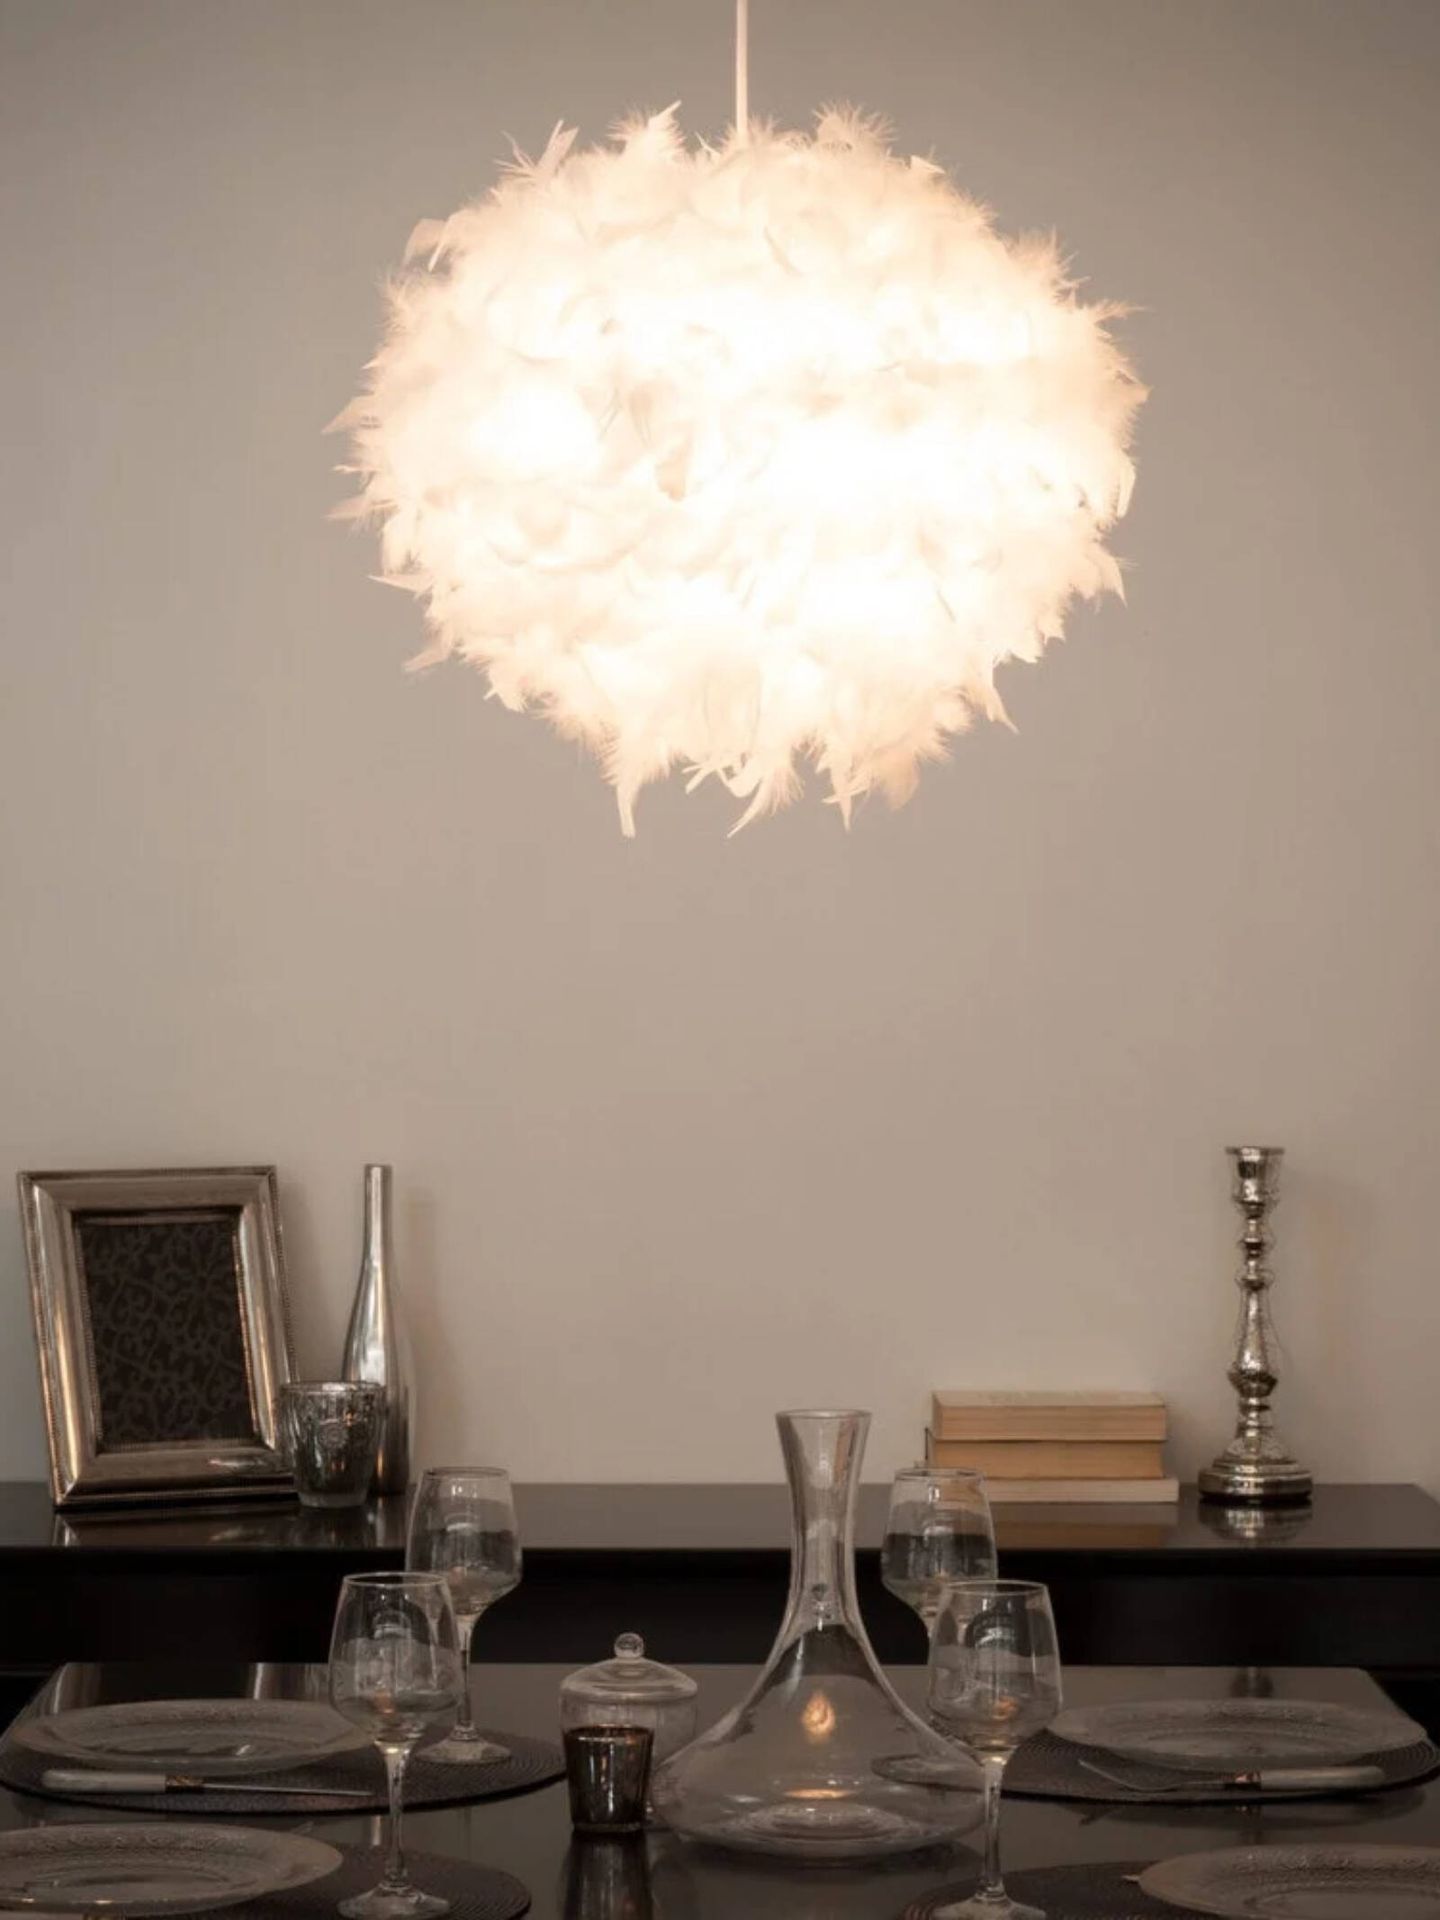 Ilumina tu casa con estas lámparas de Ikea y Maisons du Monde. (Cortesía/Maisons du Monde)